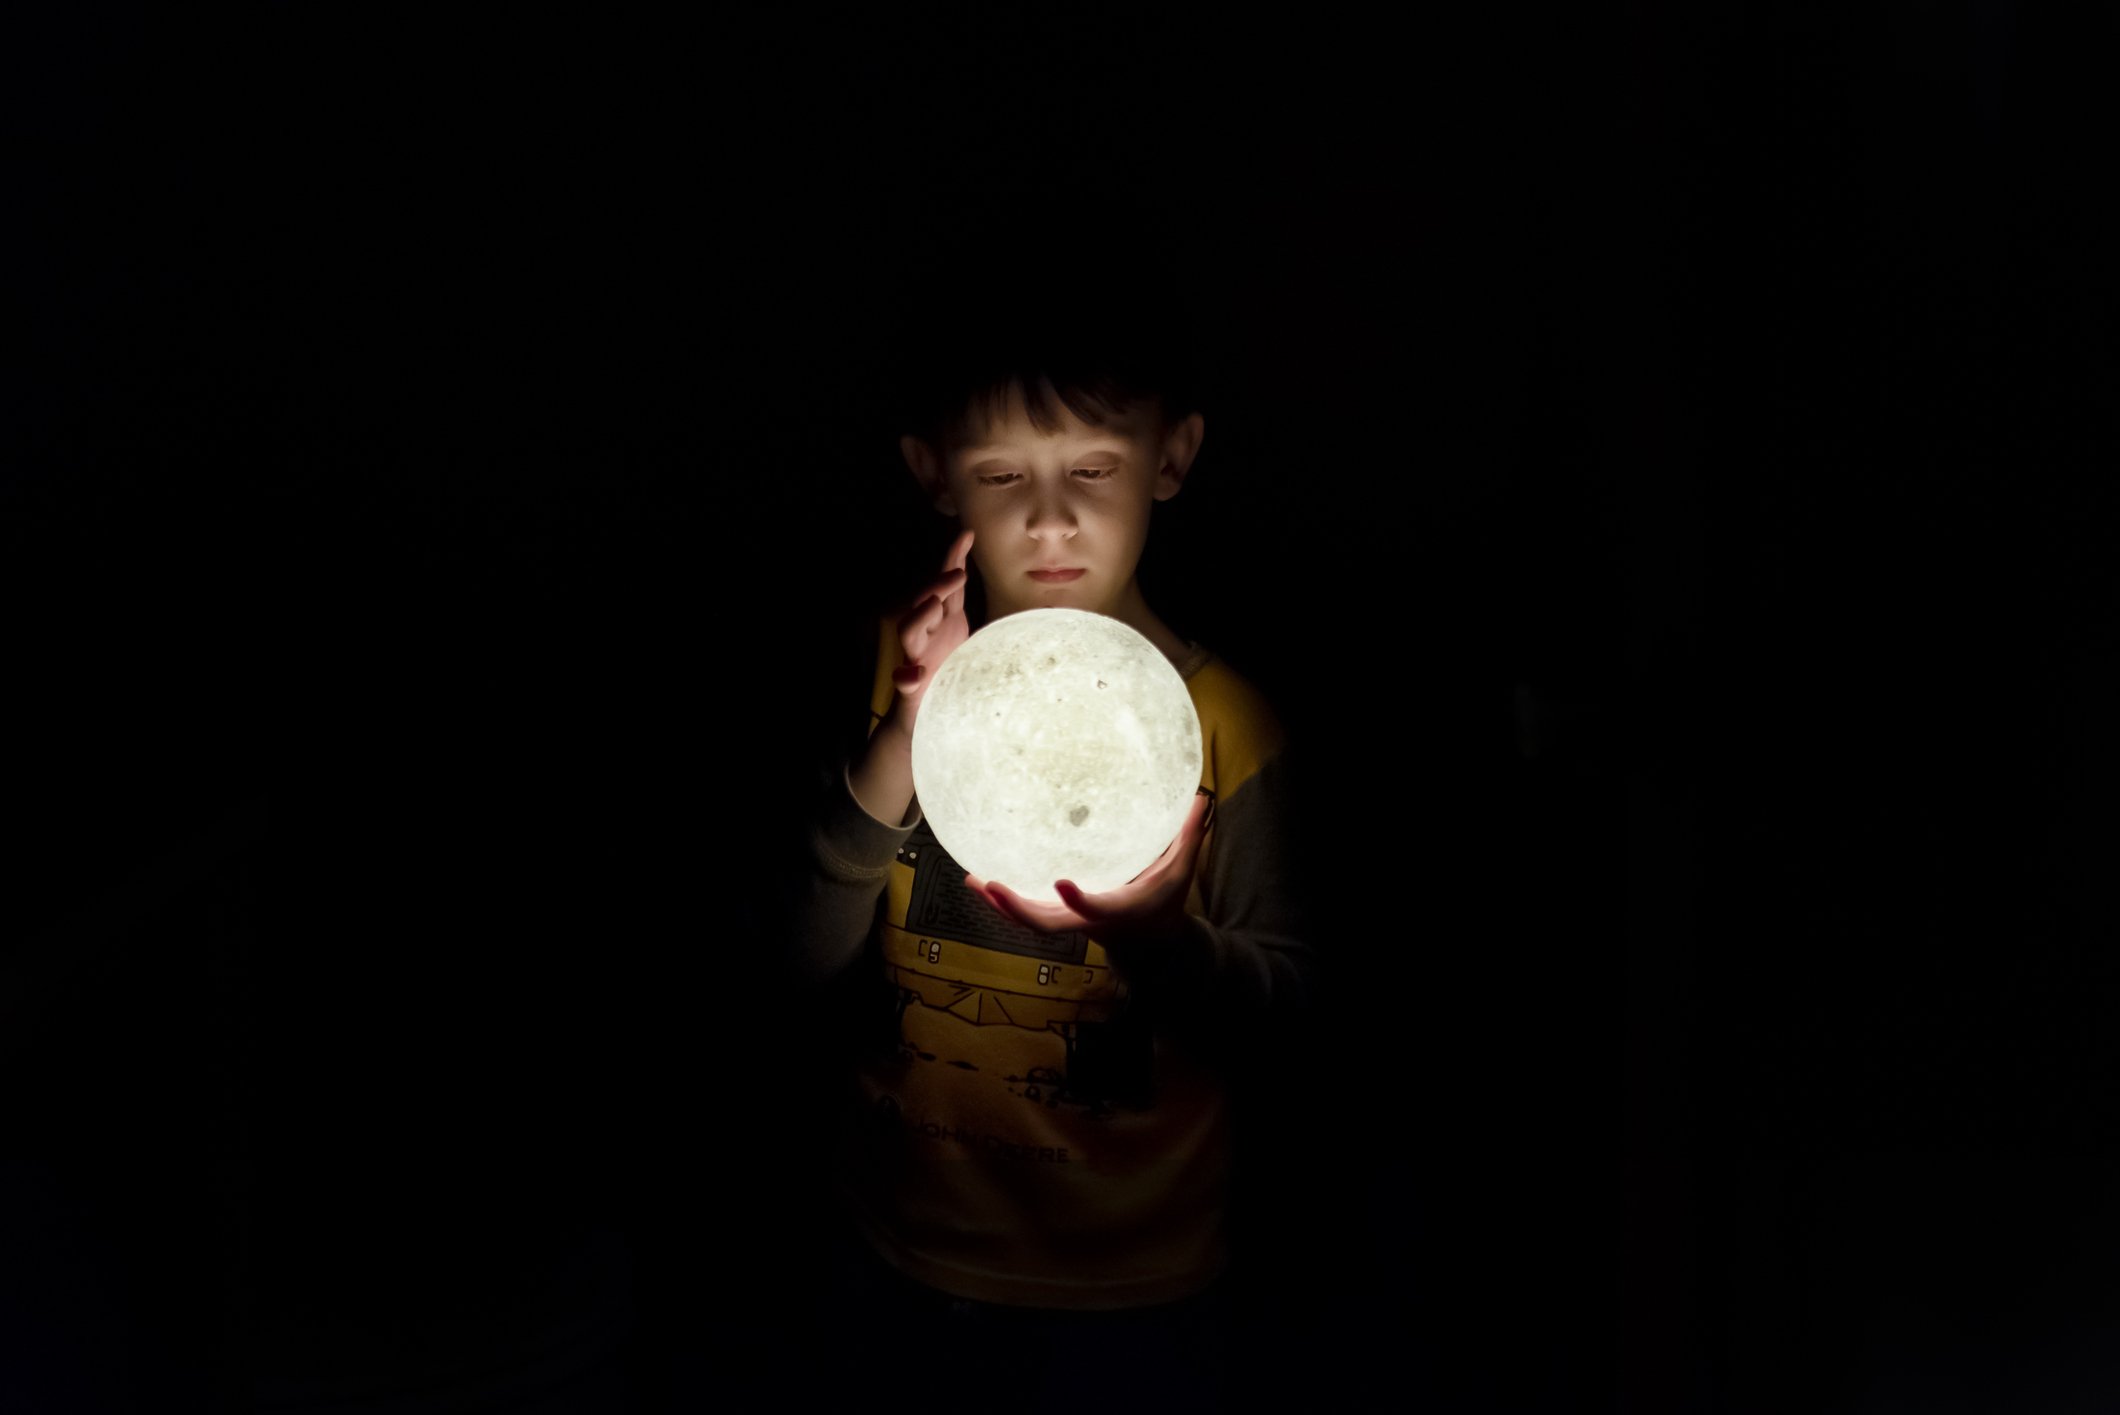 Joven mirando una lámpara de luna 3D. | Foto: Getty Images